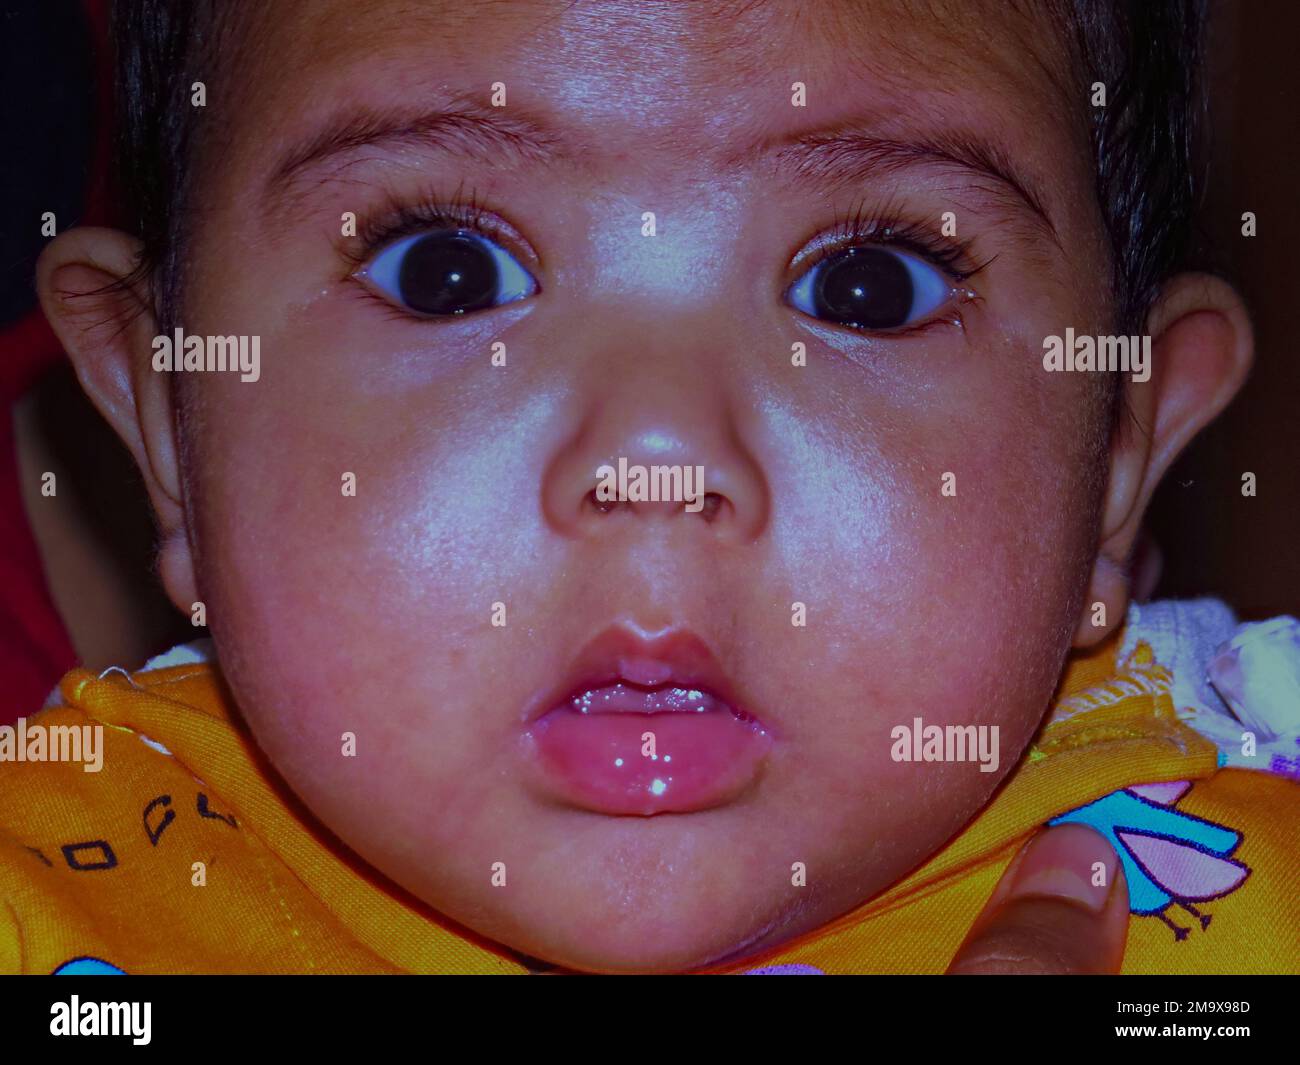 Raiganj,West Bengal,India, 11-11-2015, infant face expression Stock Photo